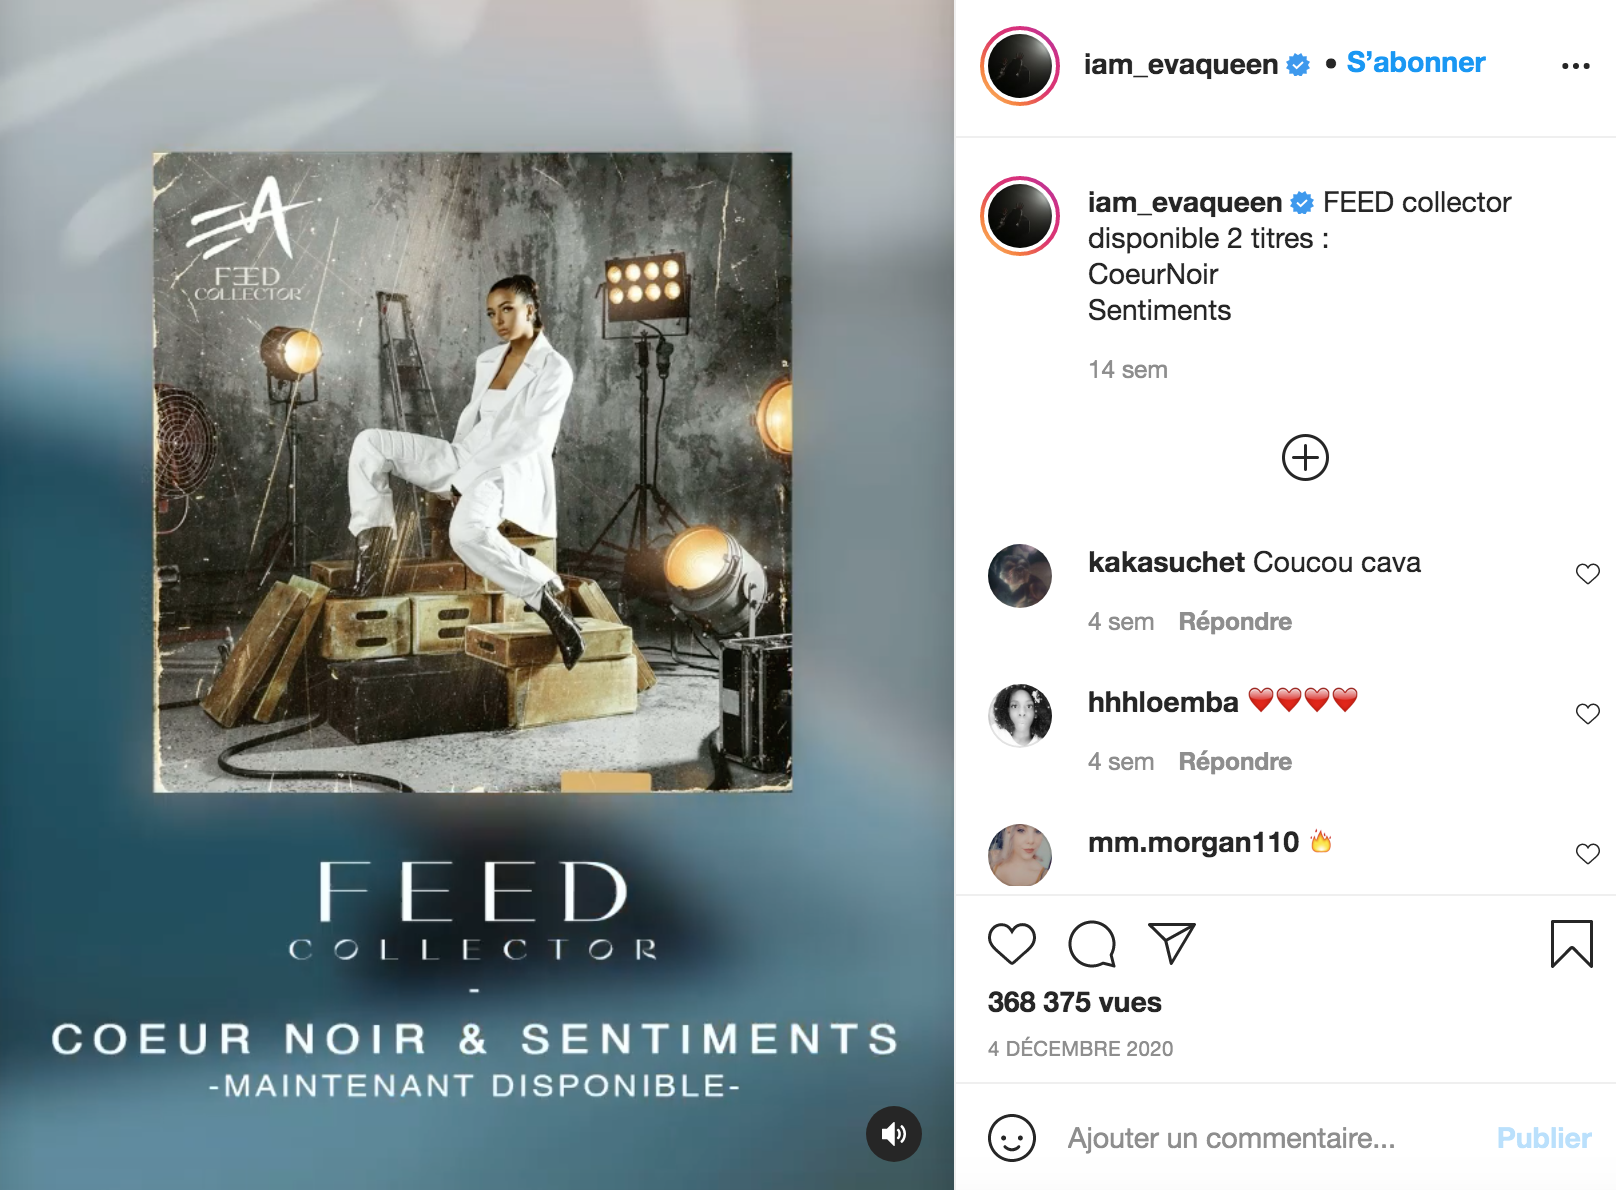  Eva a sorti une réédition de son deuxième album "Feed" @ Instagram